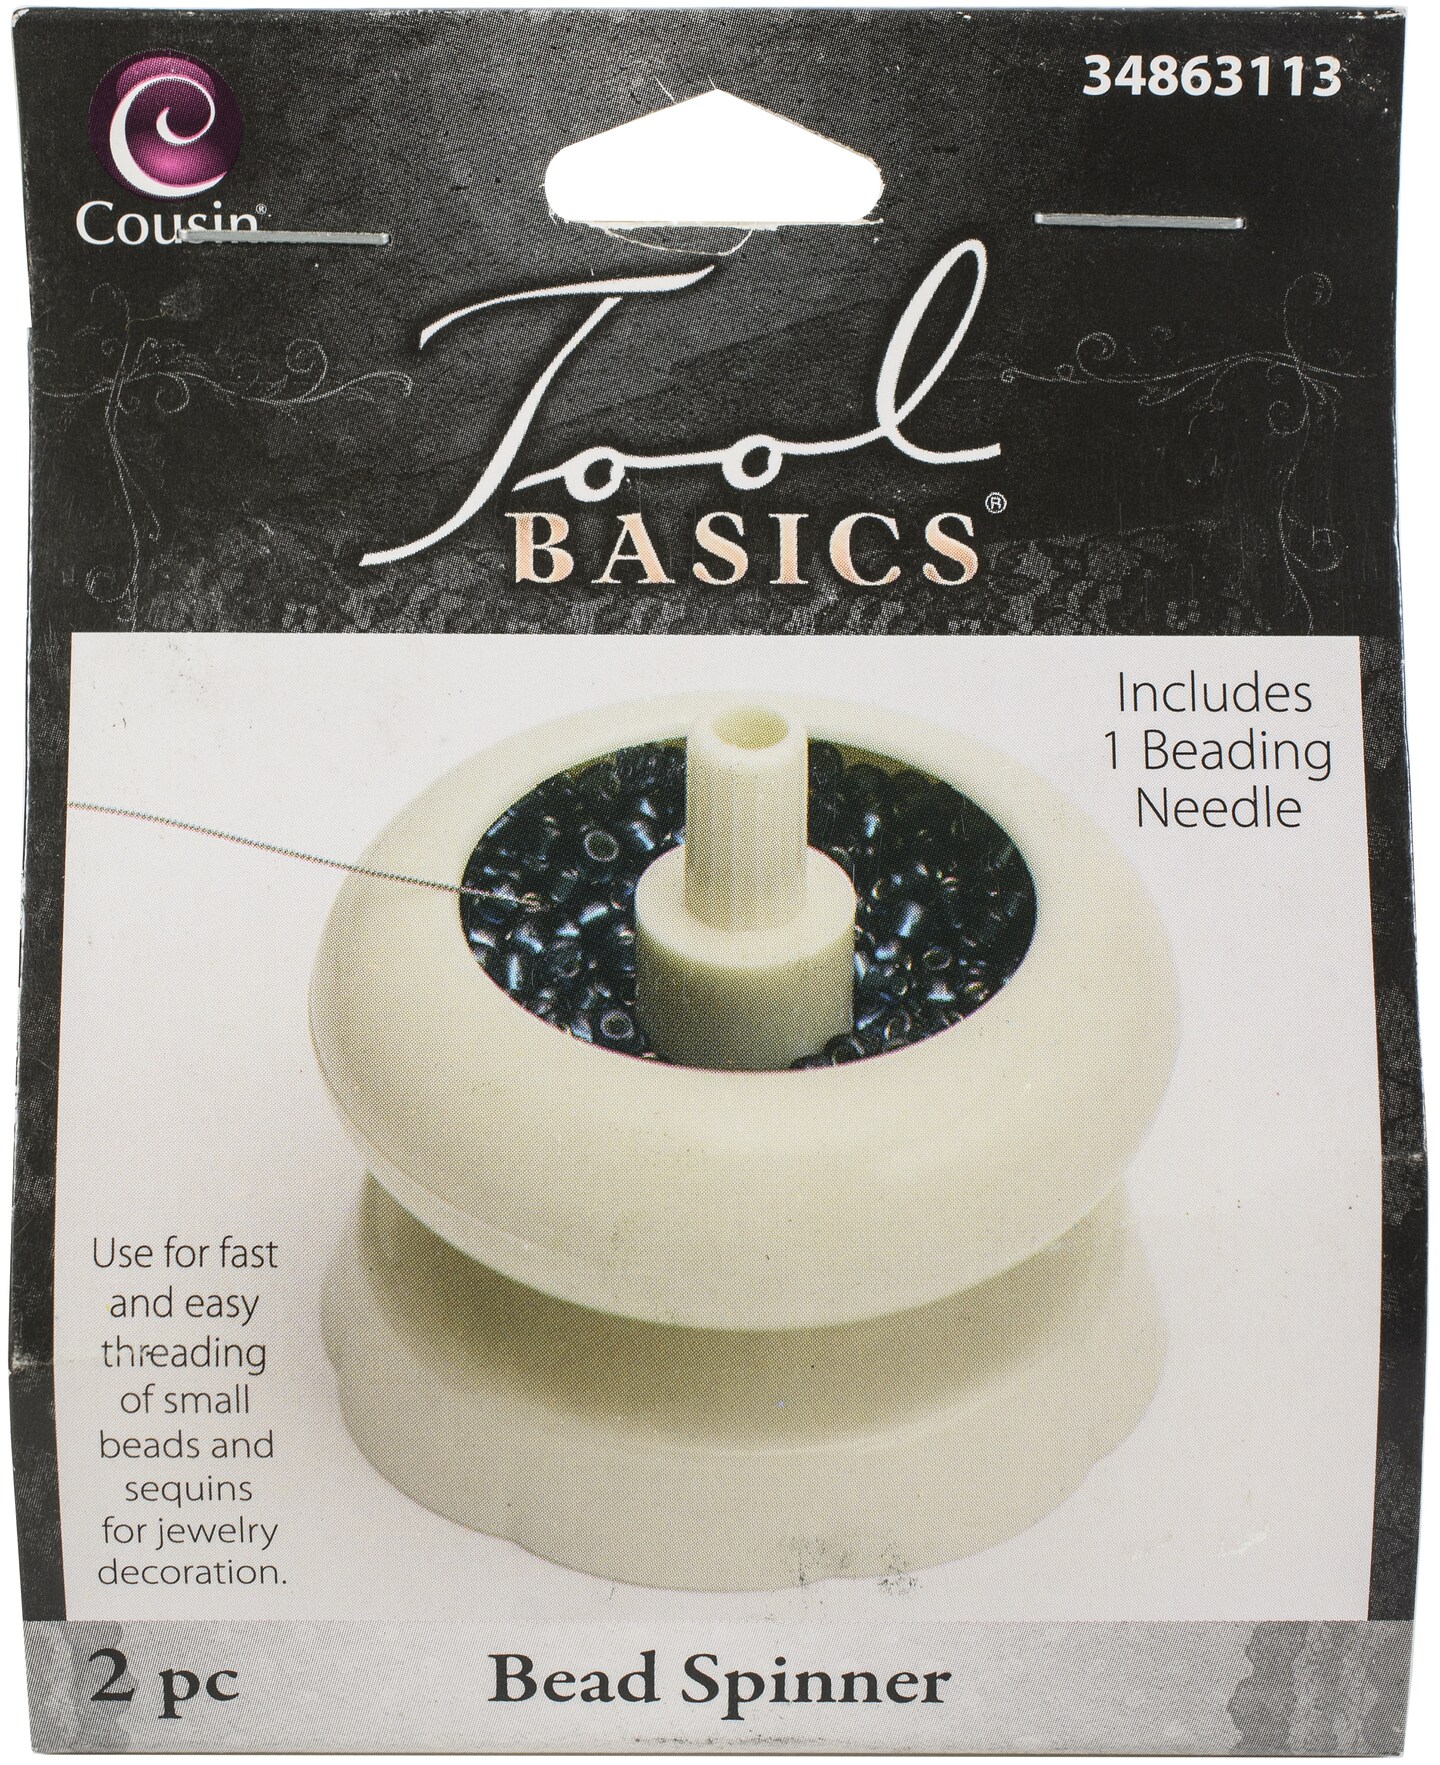 Plastic Bead Spinner With Bead Needle